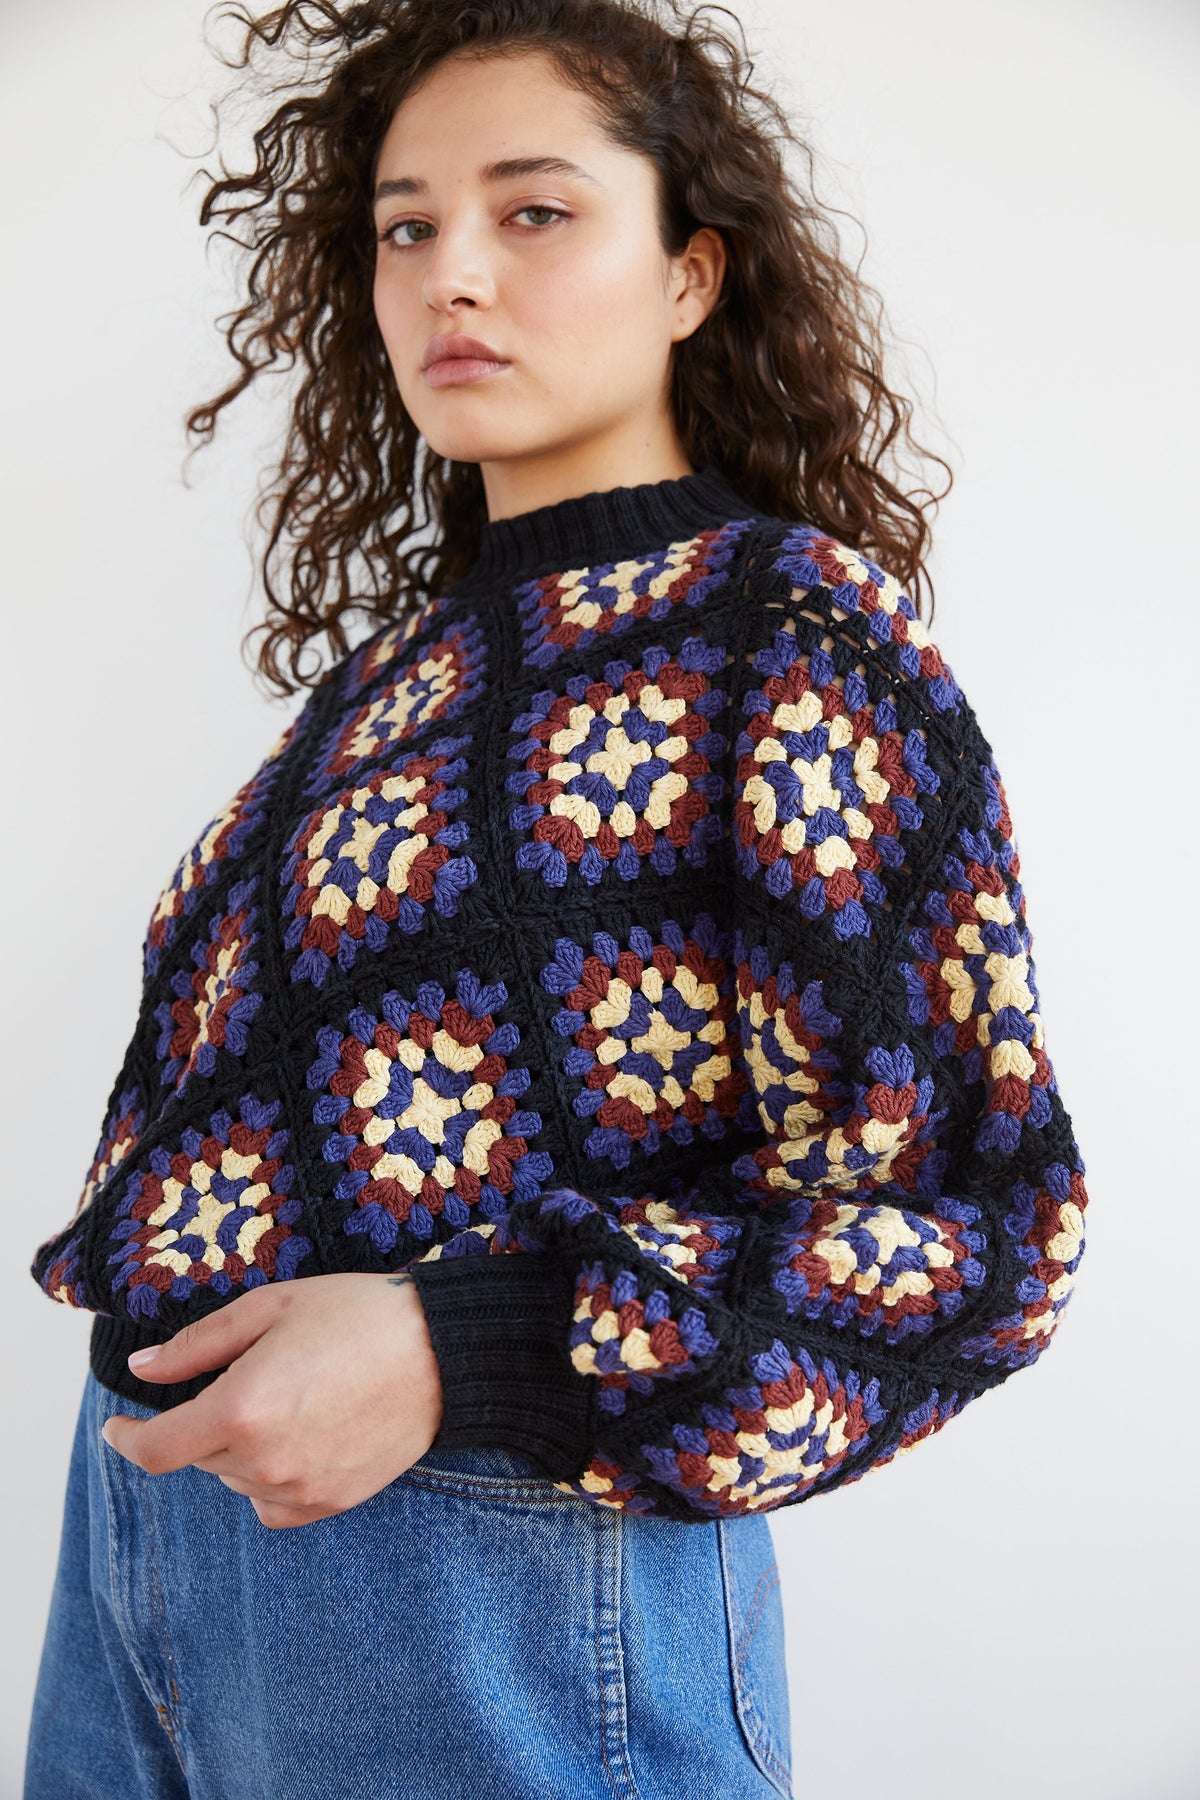 Adult Crochet Square Sweater - Pale Black